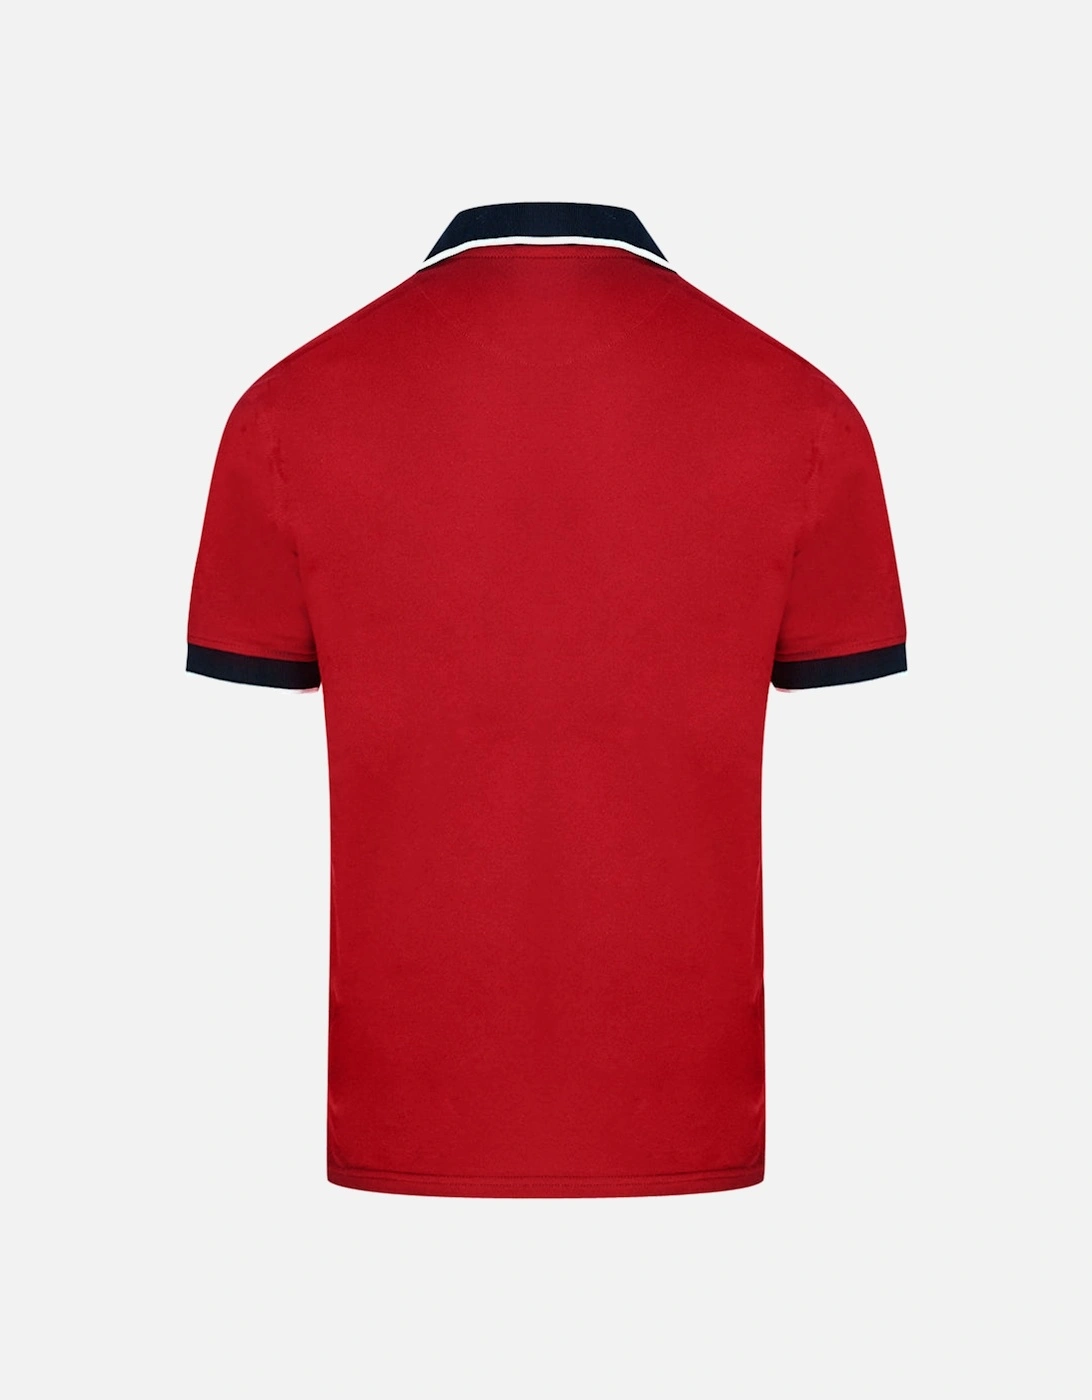 Colour Block Red Polo Shirt